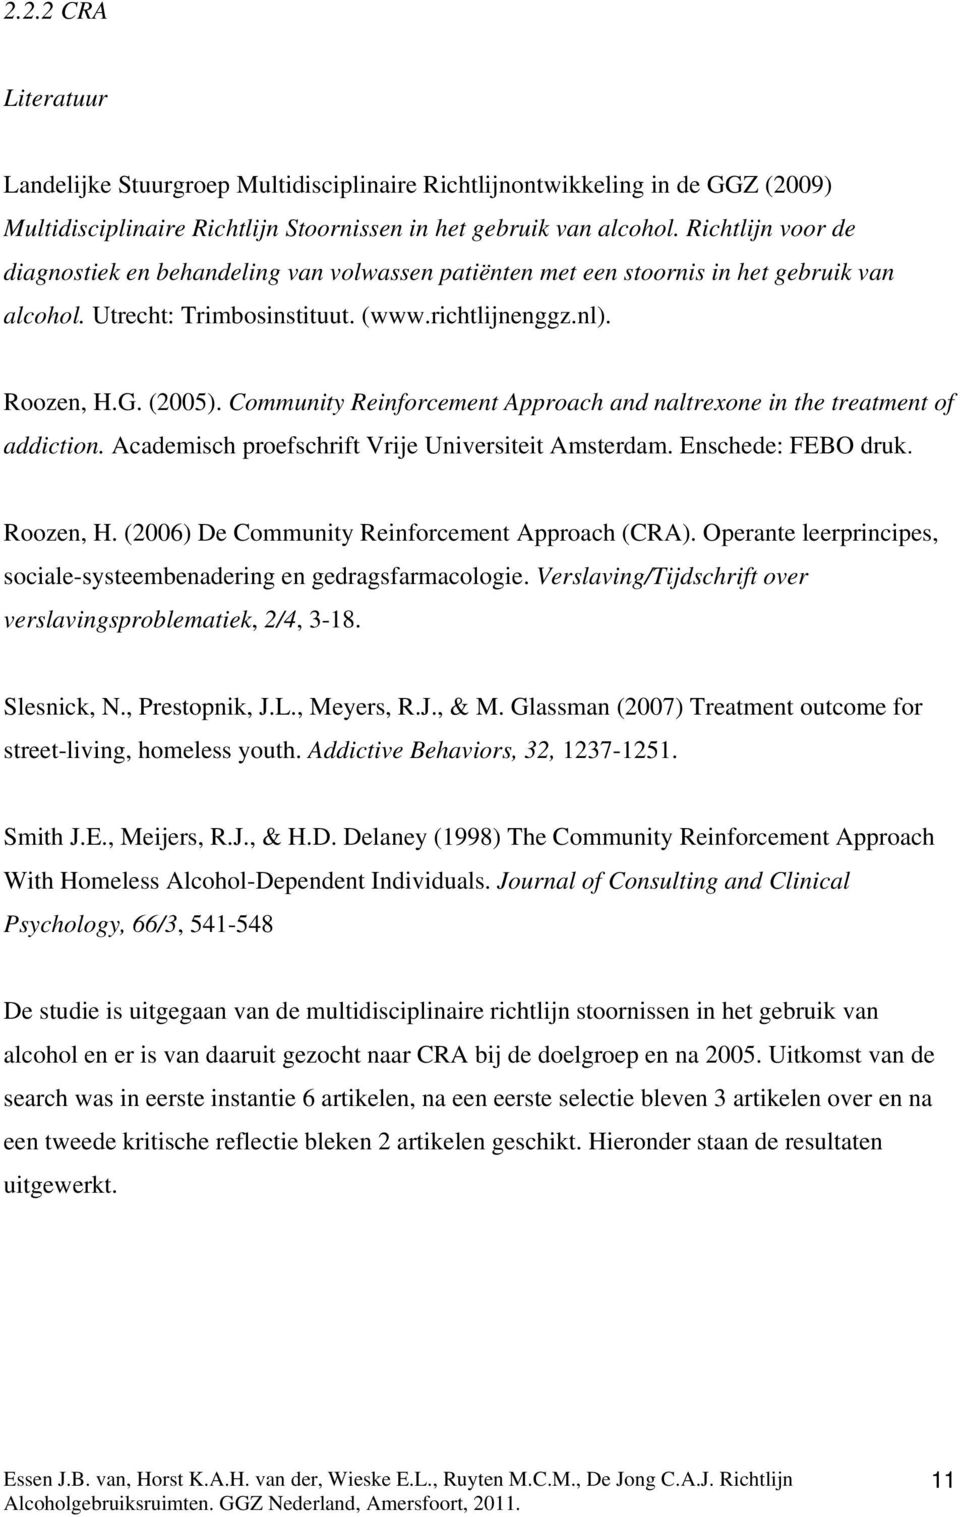 Community Reinforcement Approach and naltrexone in the treatment of addiction. Academisch proefschrift Vrije Universiteit Amsterdam. Enschede: FEBO druk. Roozen, H.